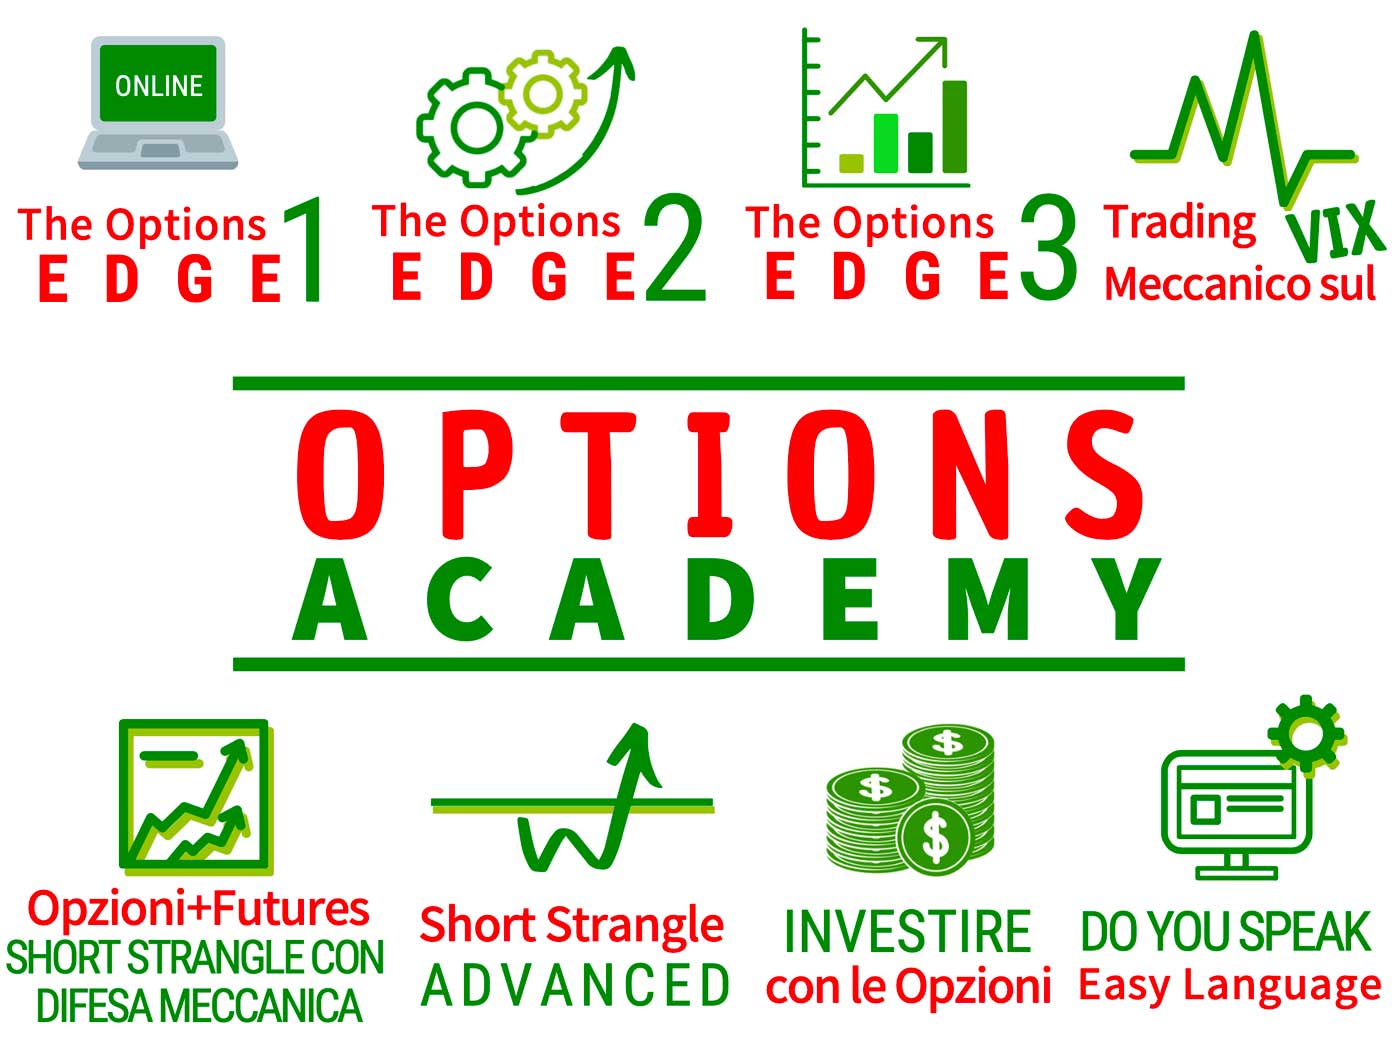 Corso Opzioni trading academy, qtlab corsi trading opzioni, options academy 2021, trading corso